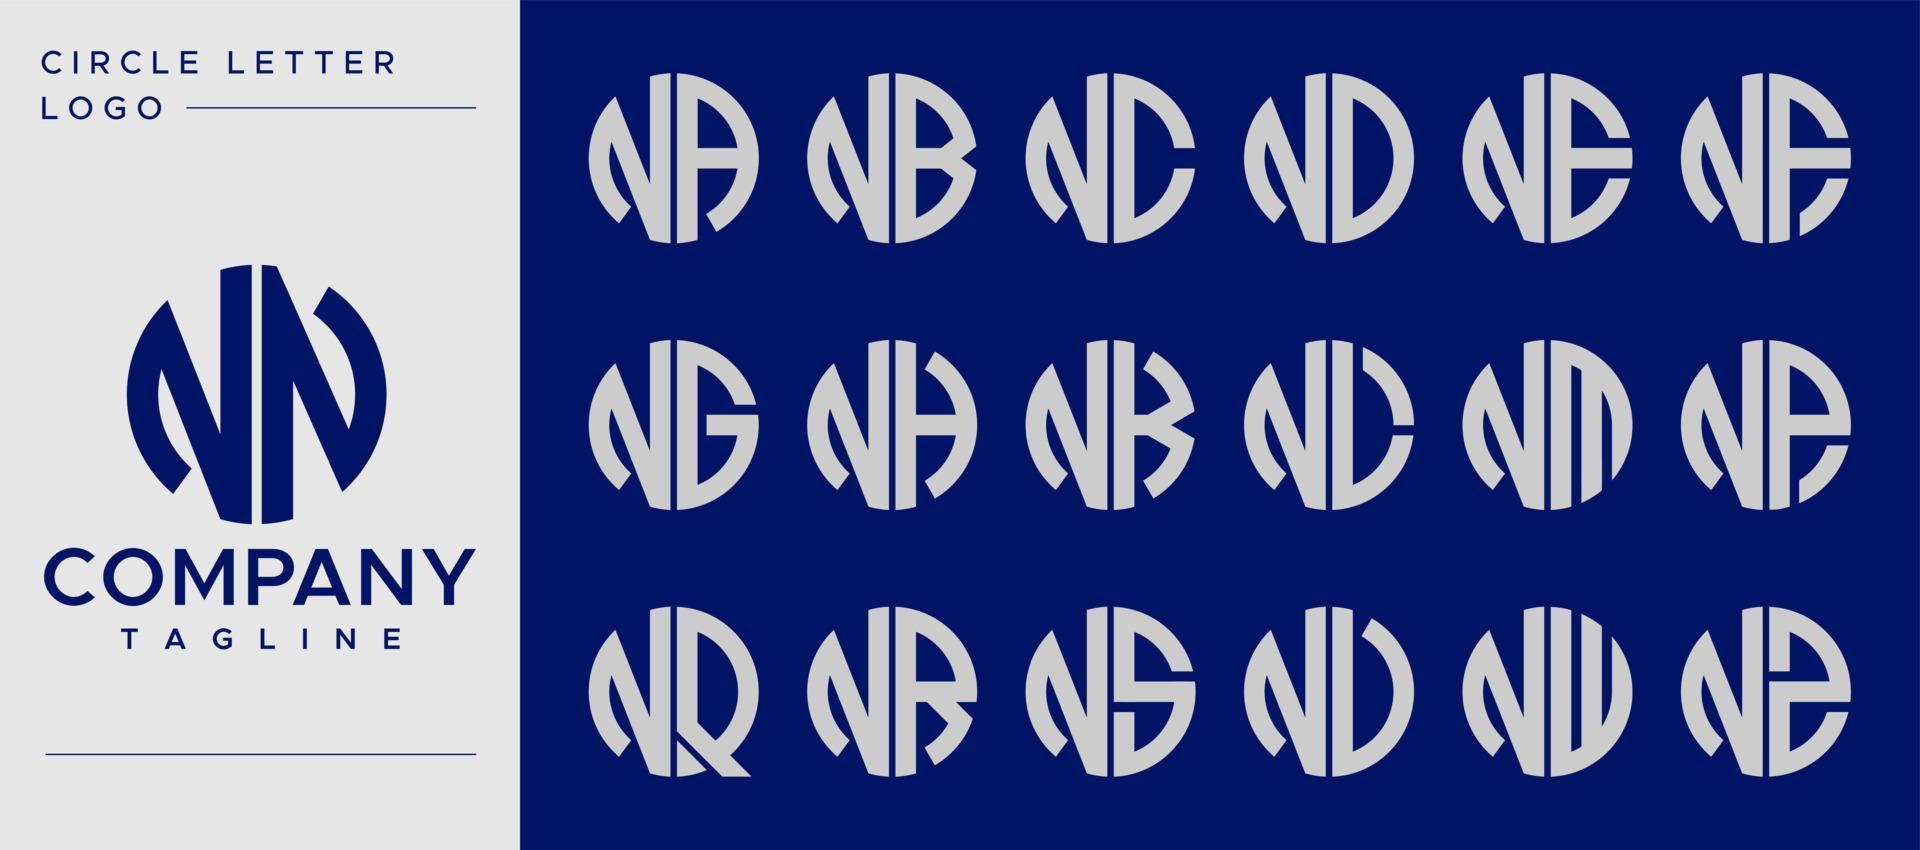 colección de sencillo circulo letra norte logo diseño vector. norte letra marca modelo colocar. vector